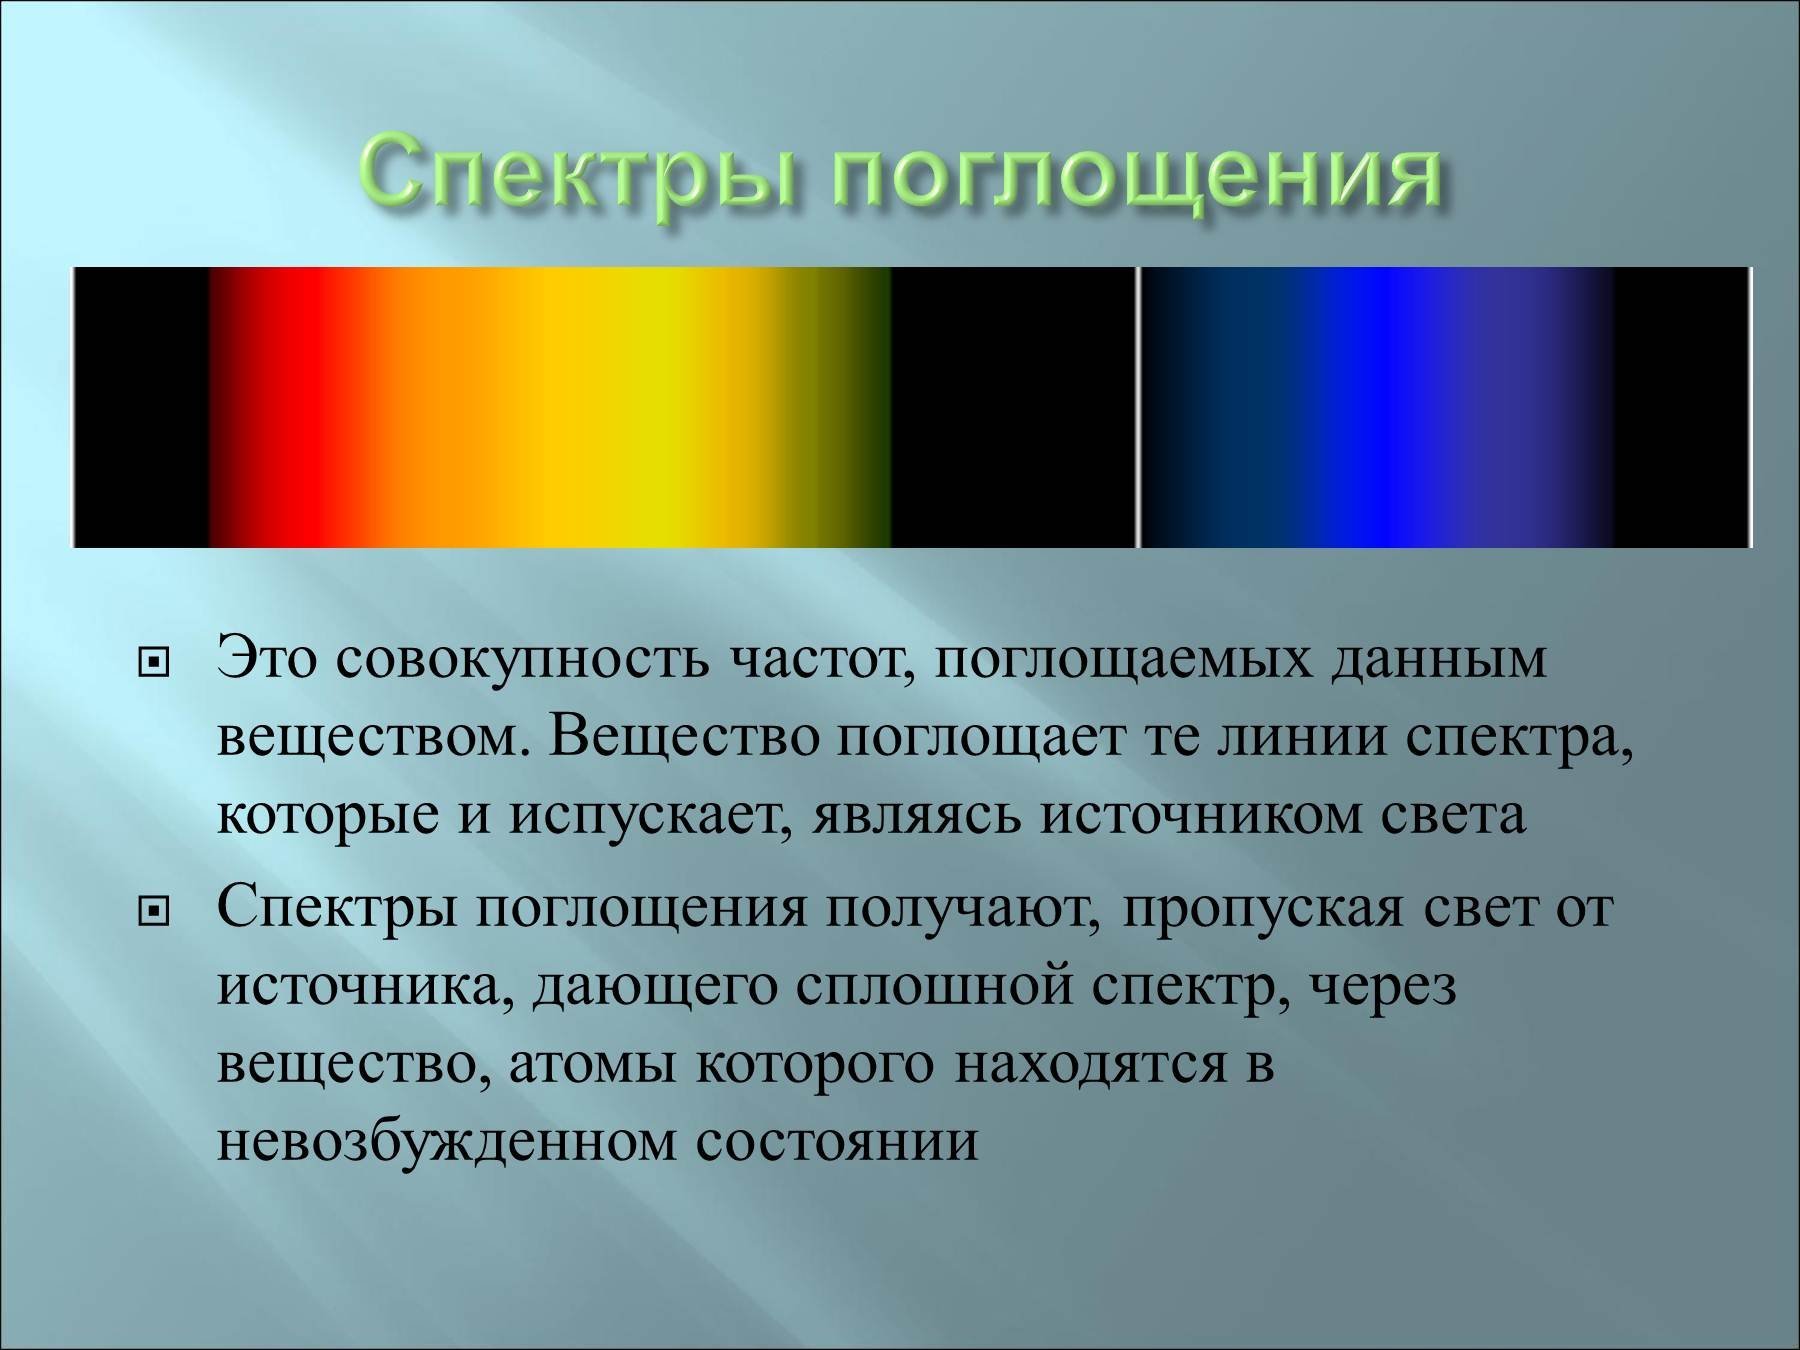 Сплошной спектр рисунок физика - 68 фото